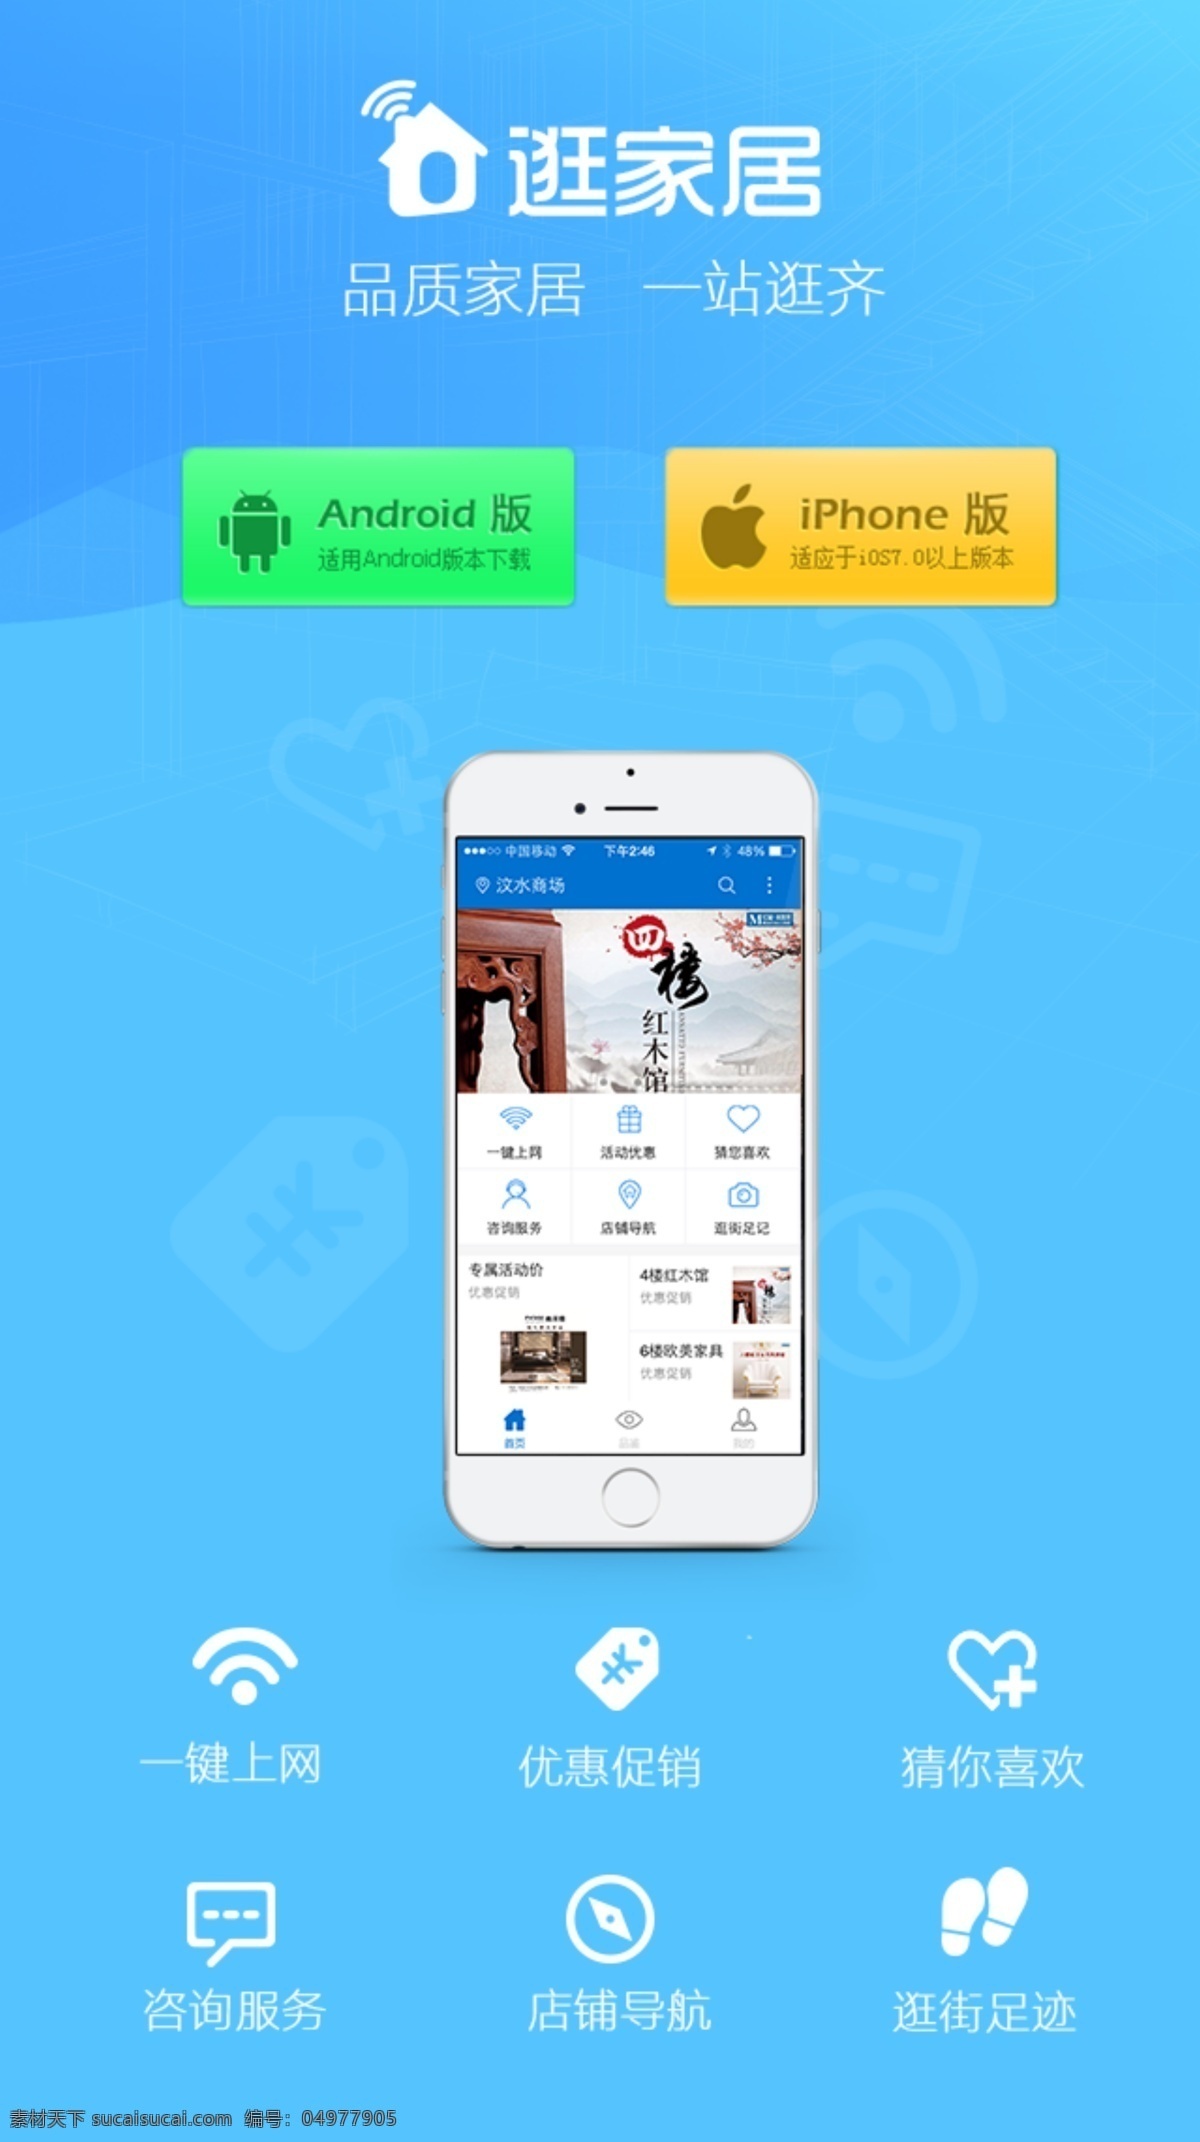 wap 版 页面 android iphone 安卓下载 苹果下载 wap页 html5 h5页 青色 天蓝色